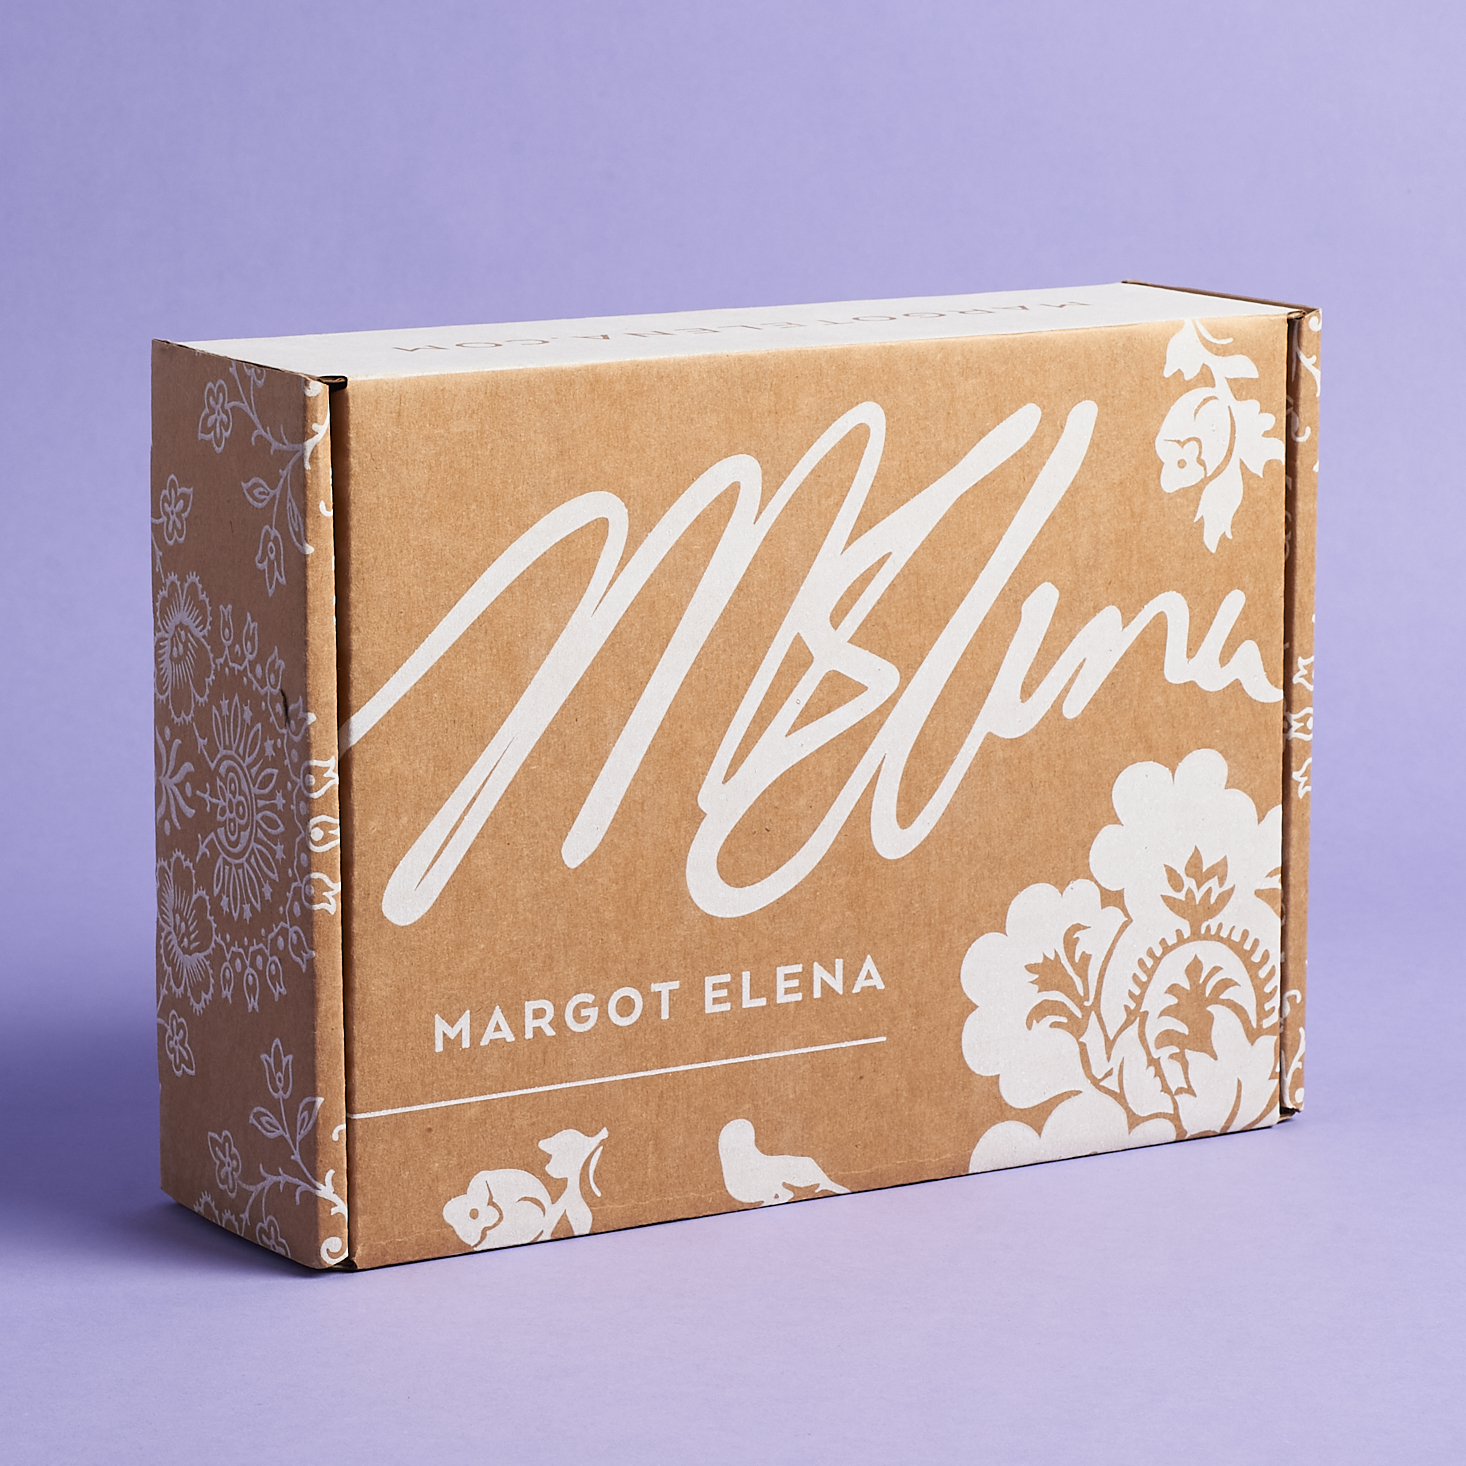 Margot Elena Subscription Box Review – Winter 2020